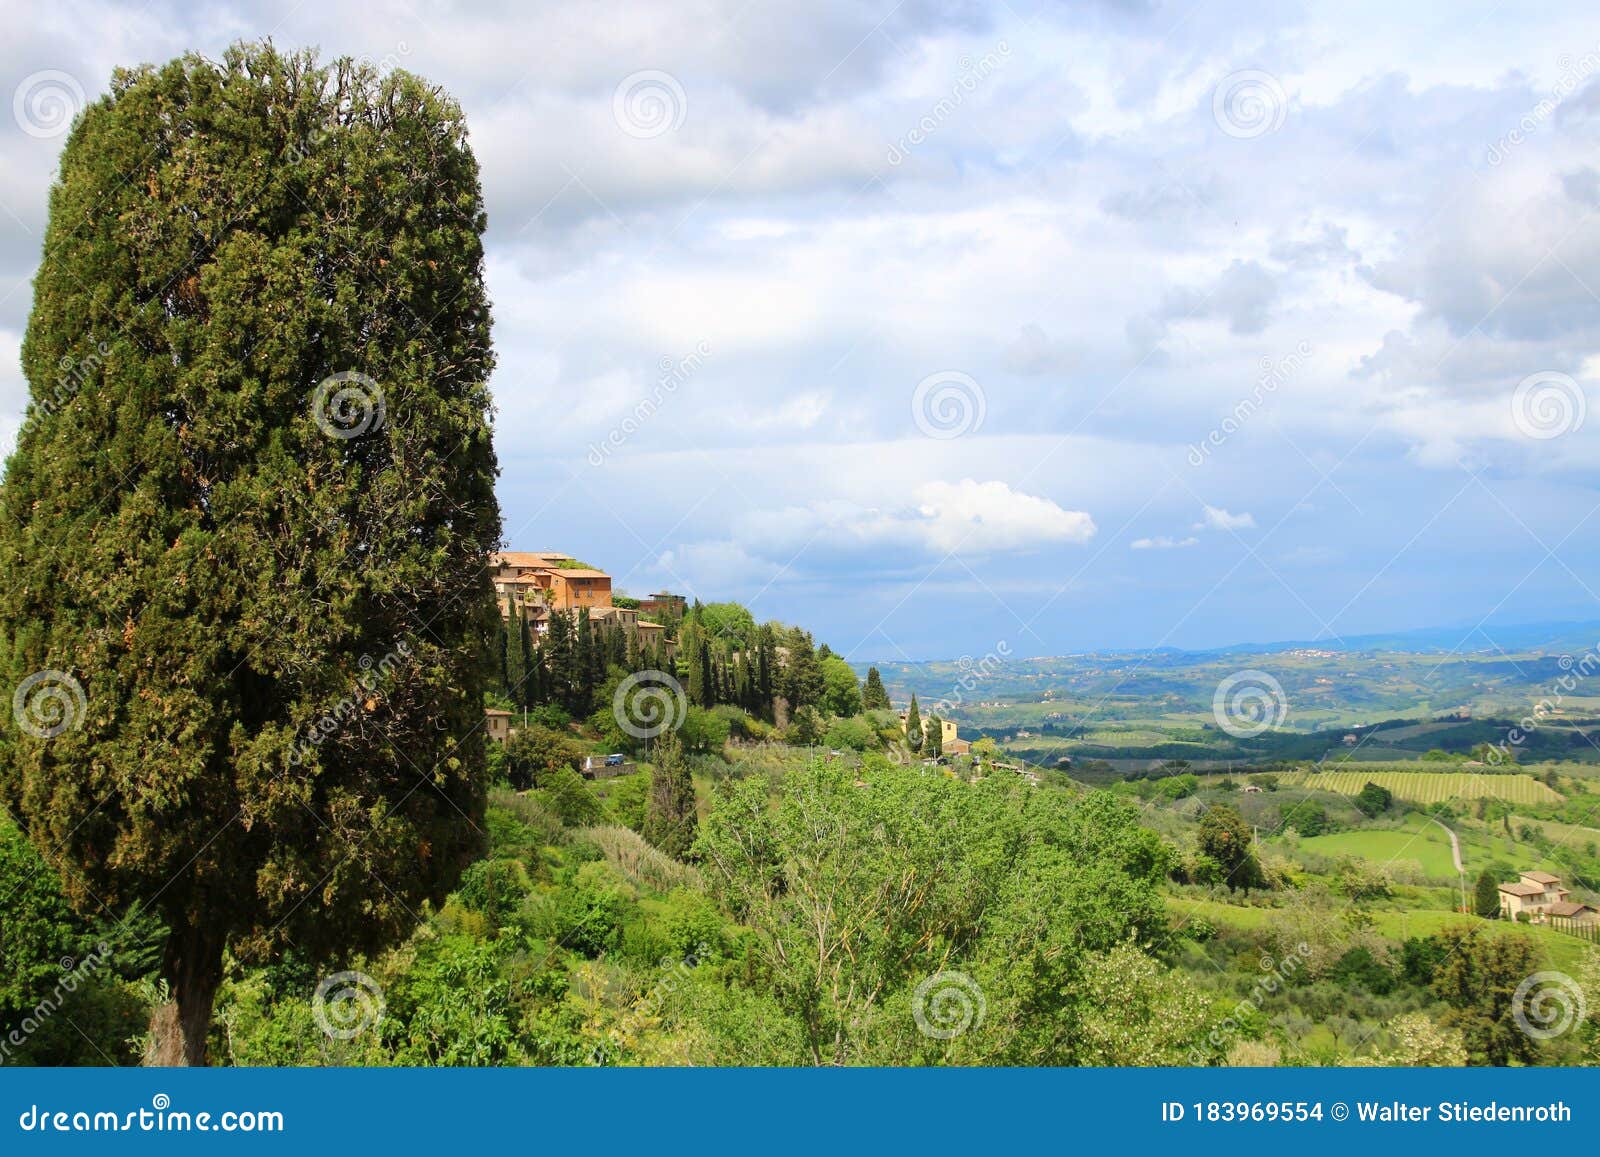 landscape in tuscany, italy